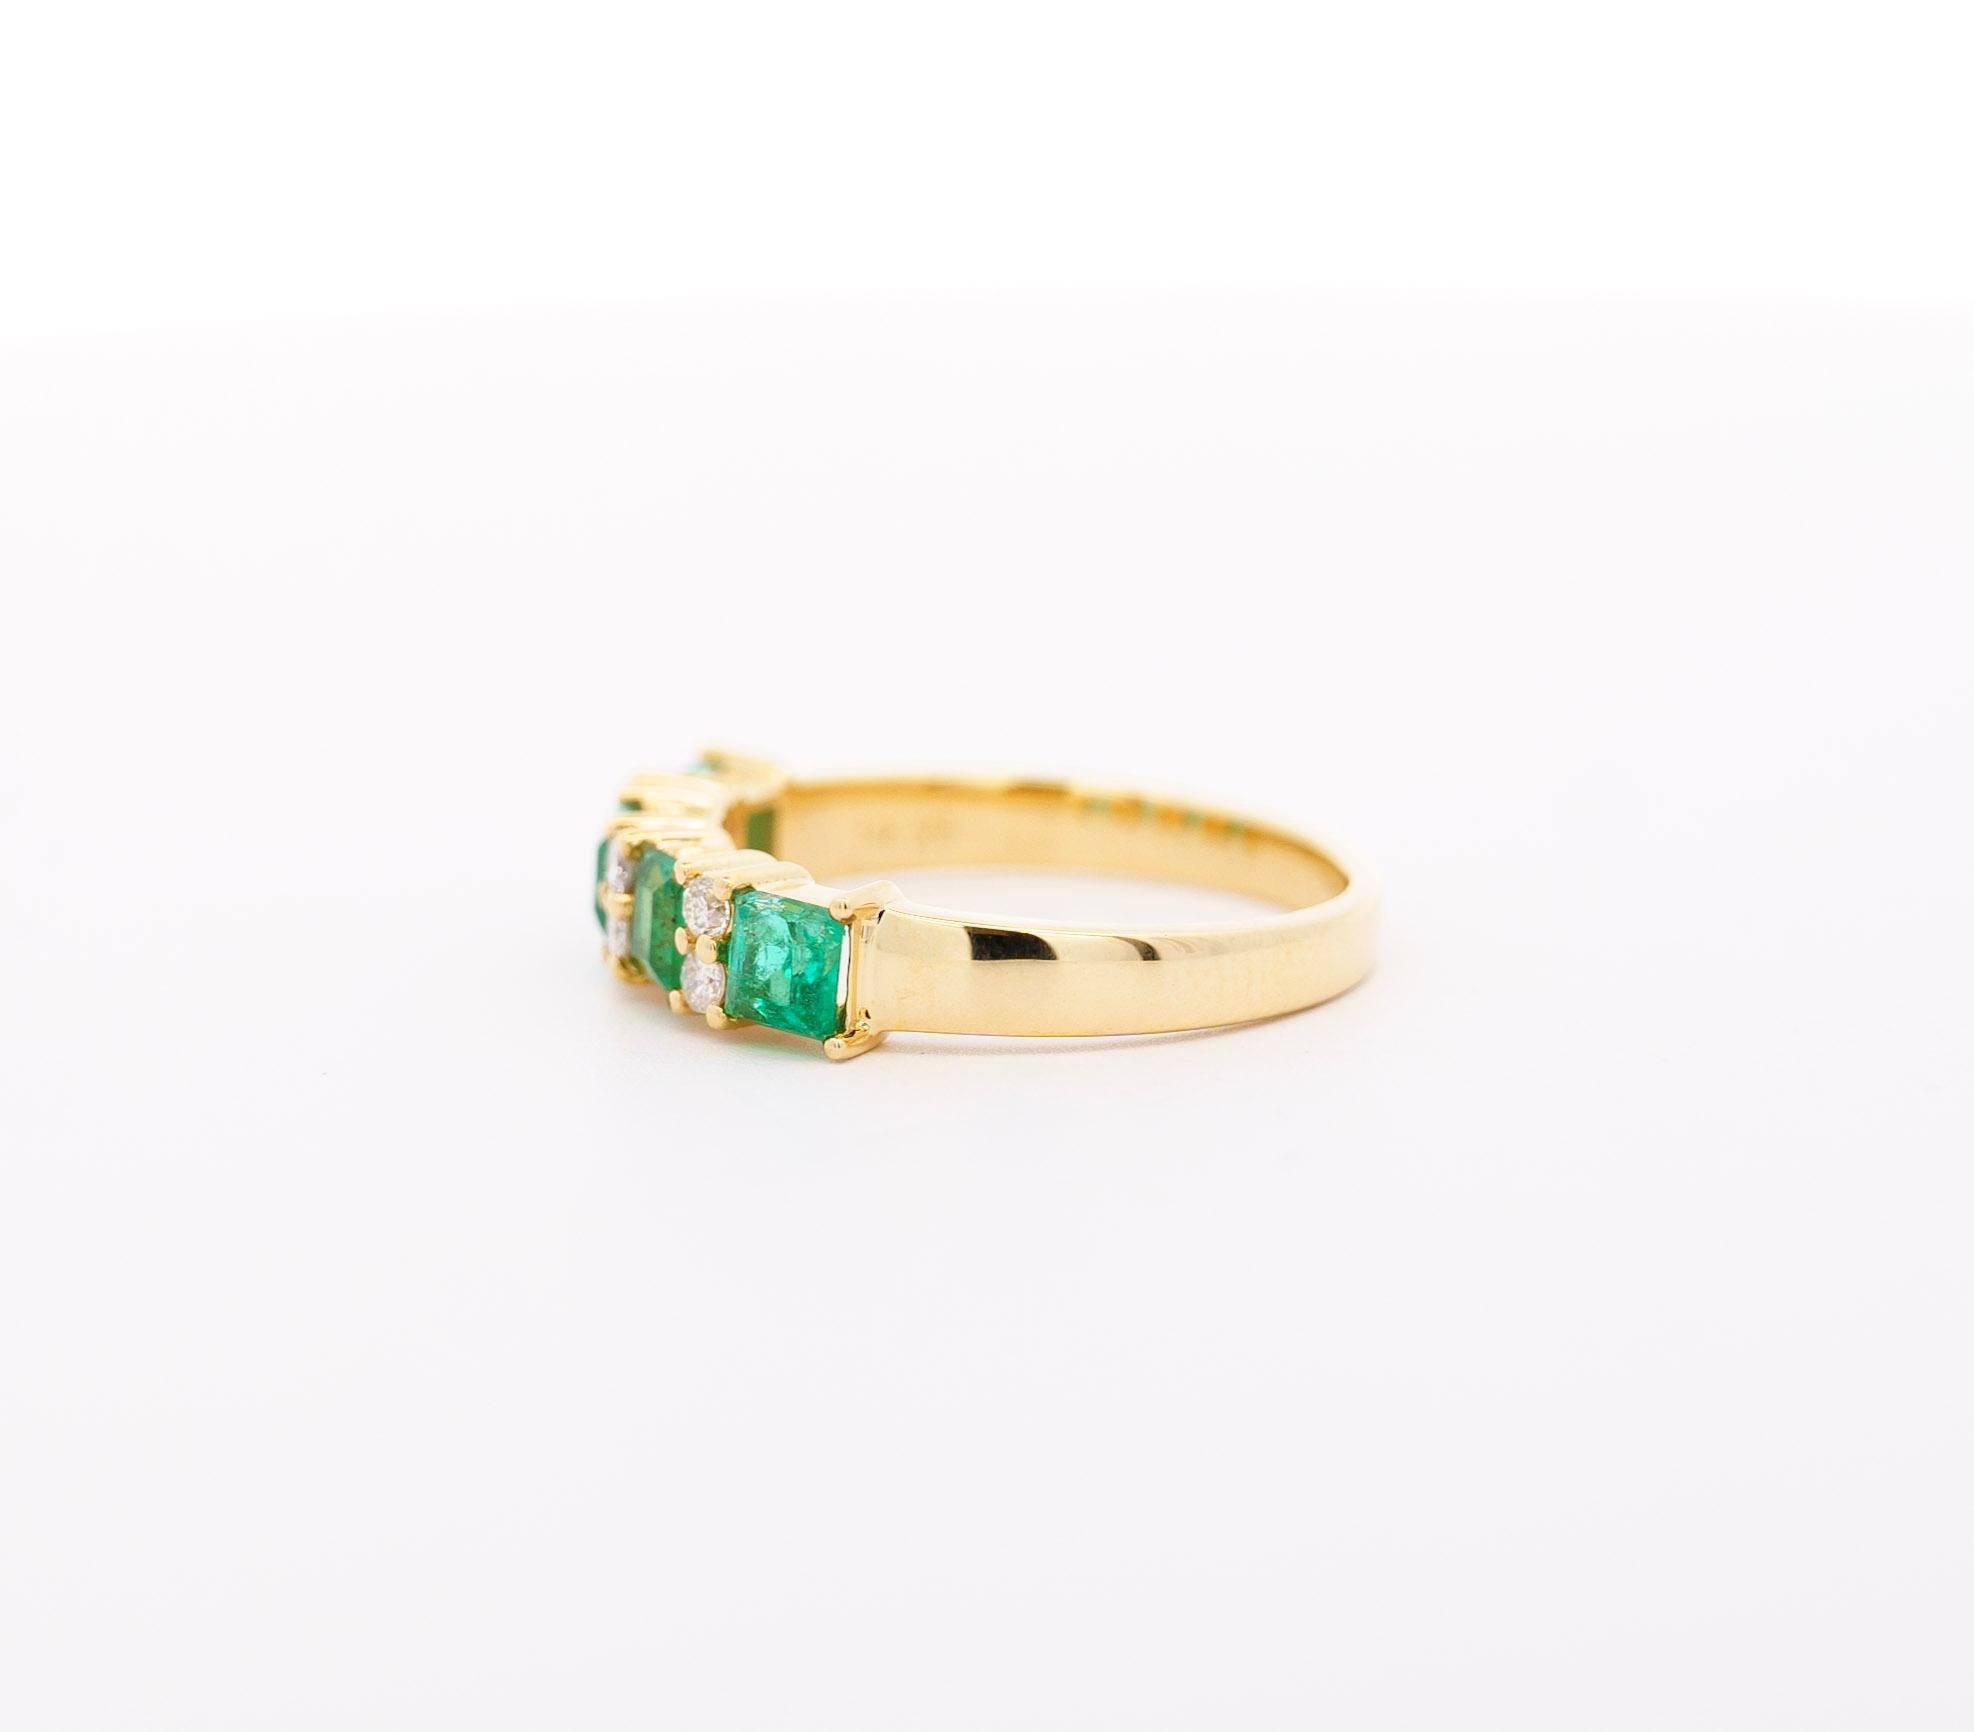 1.0 Carat Square Cut Emerald & Diamond 5-stone Ring in 14K Yellow Gold In New Condition For Sale In Miami, FL